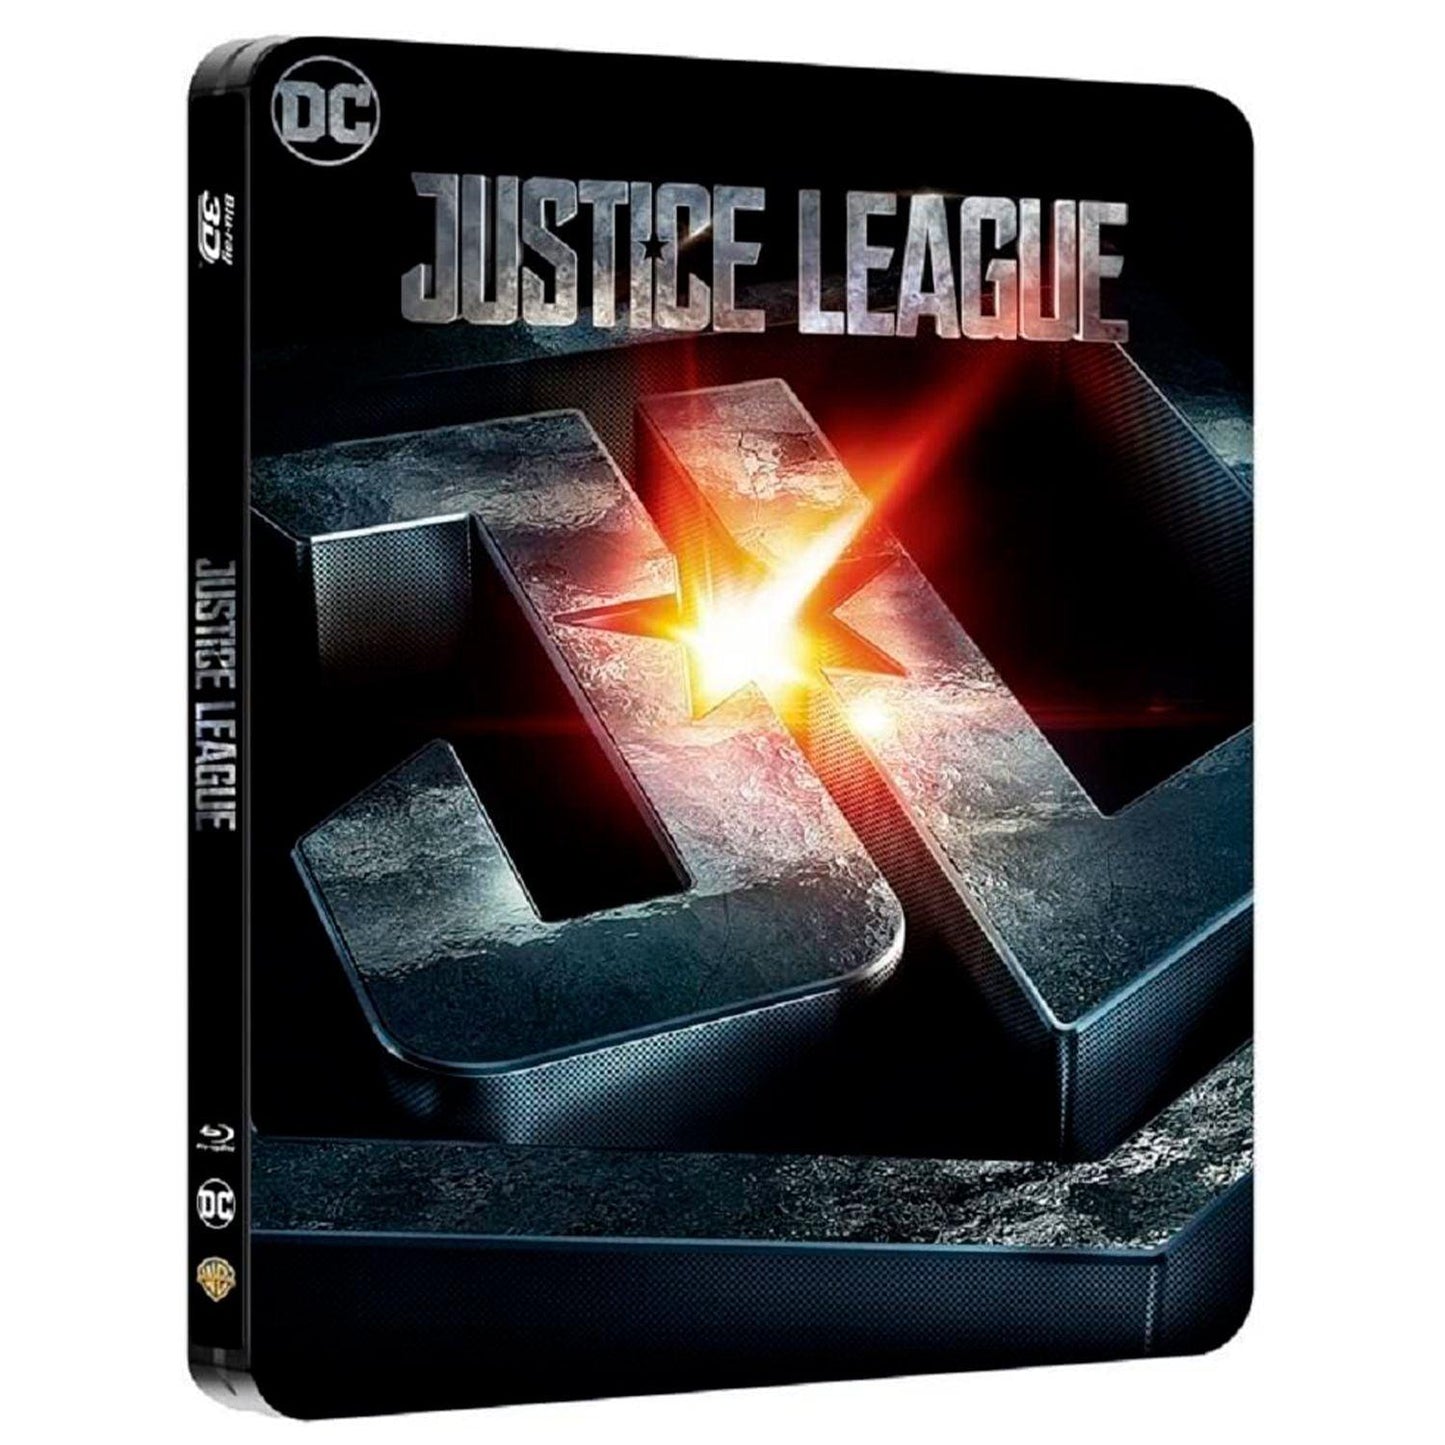 Лига справедливости 3D + 2D Steelbook (2 Blu-ray)